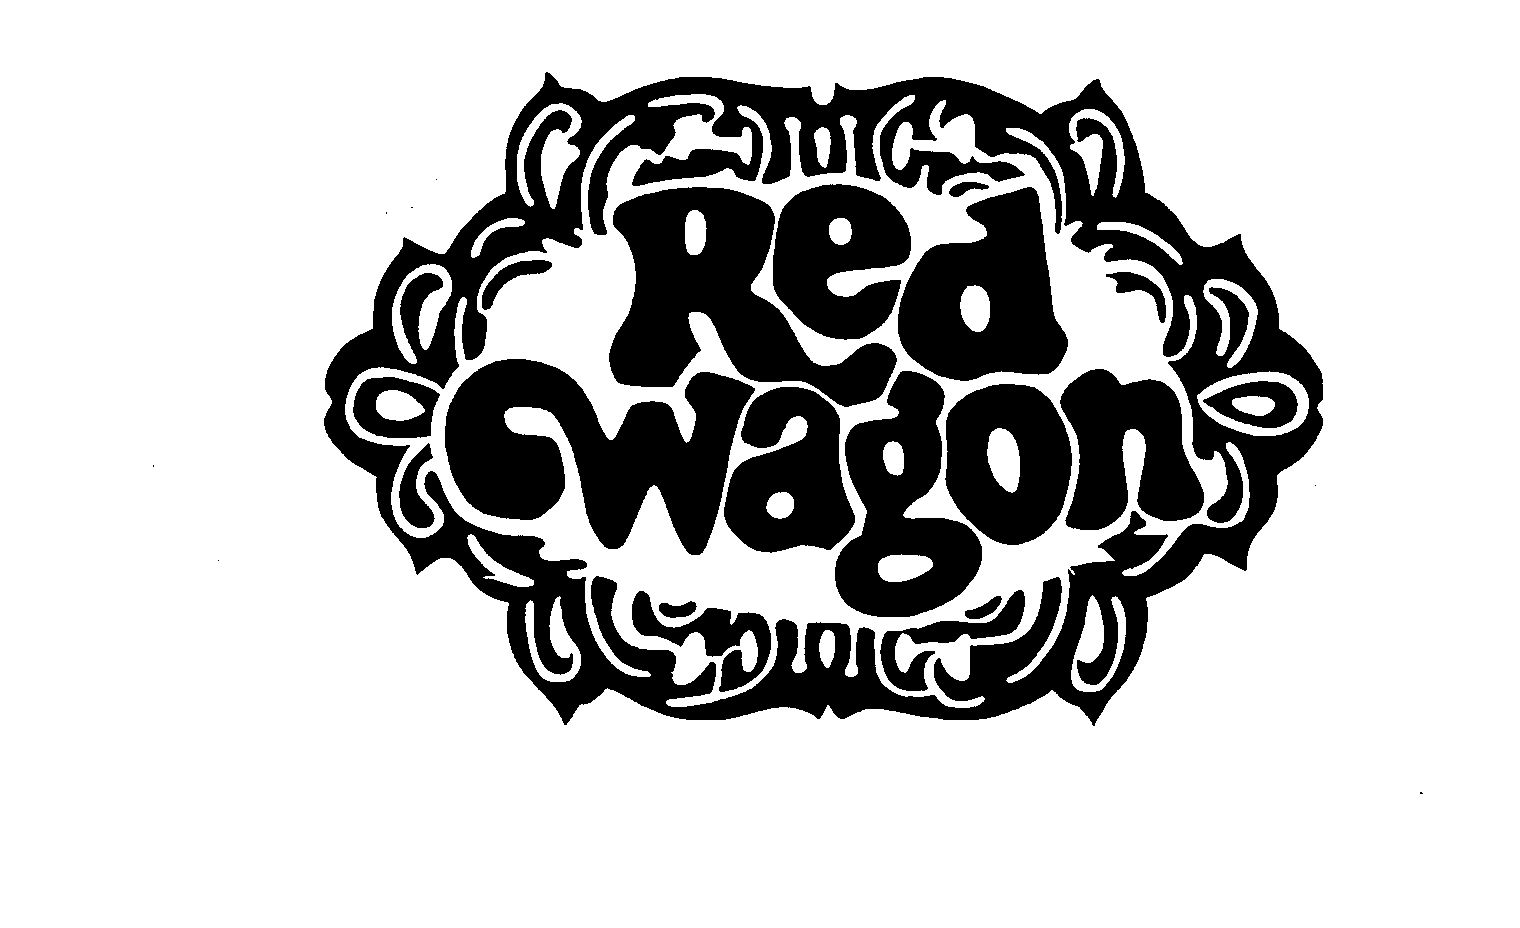 Trademark Logo RED WAGON